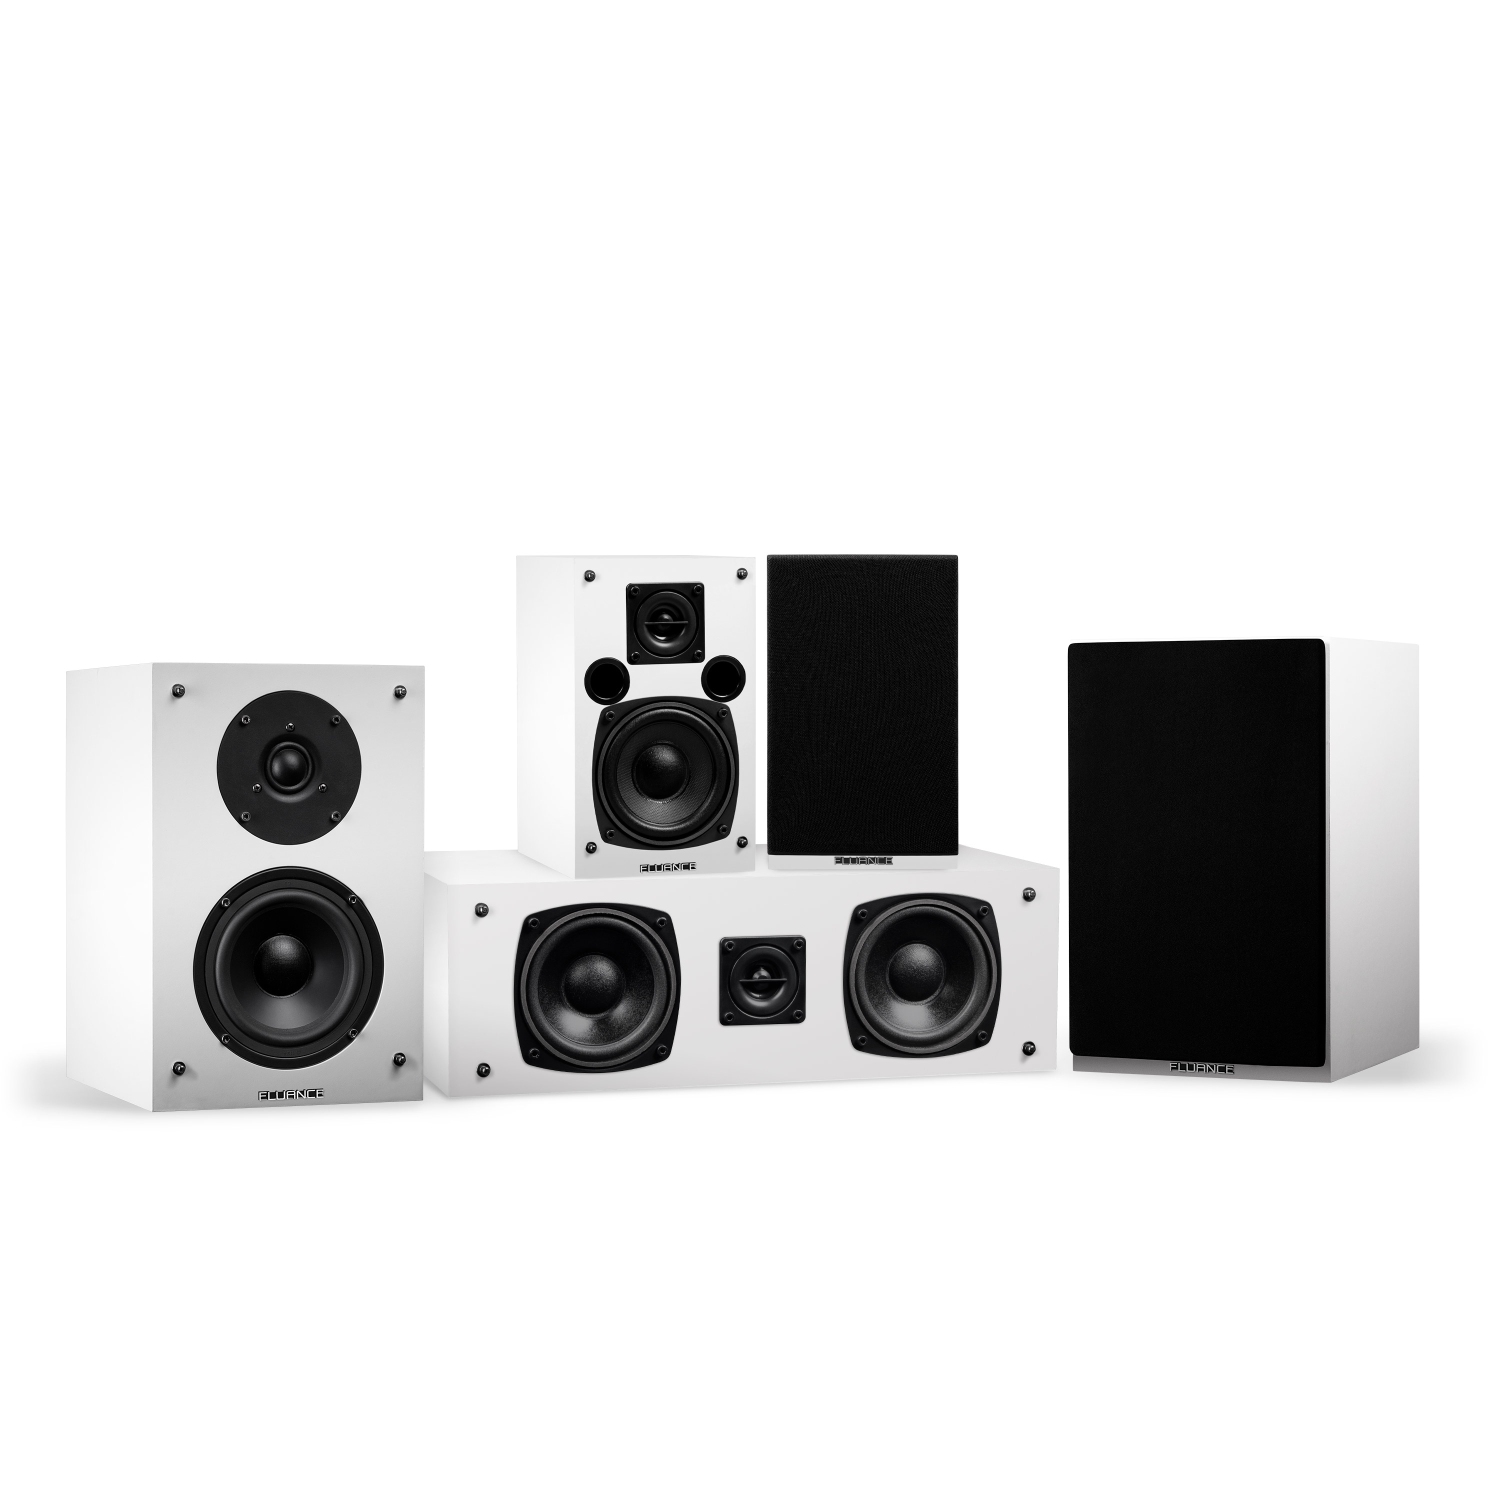 Fluance Elite High Definition Compact Surround Sound Home Theater 5.0 Speaker System - White (SX50WHC)